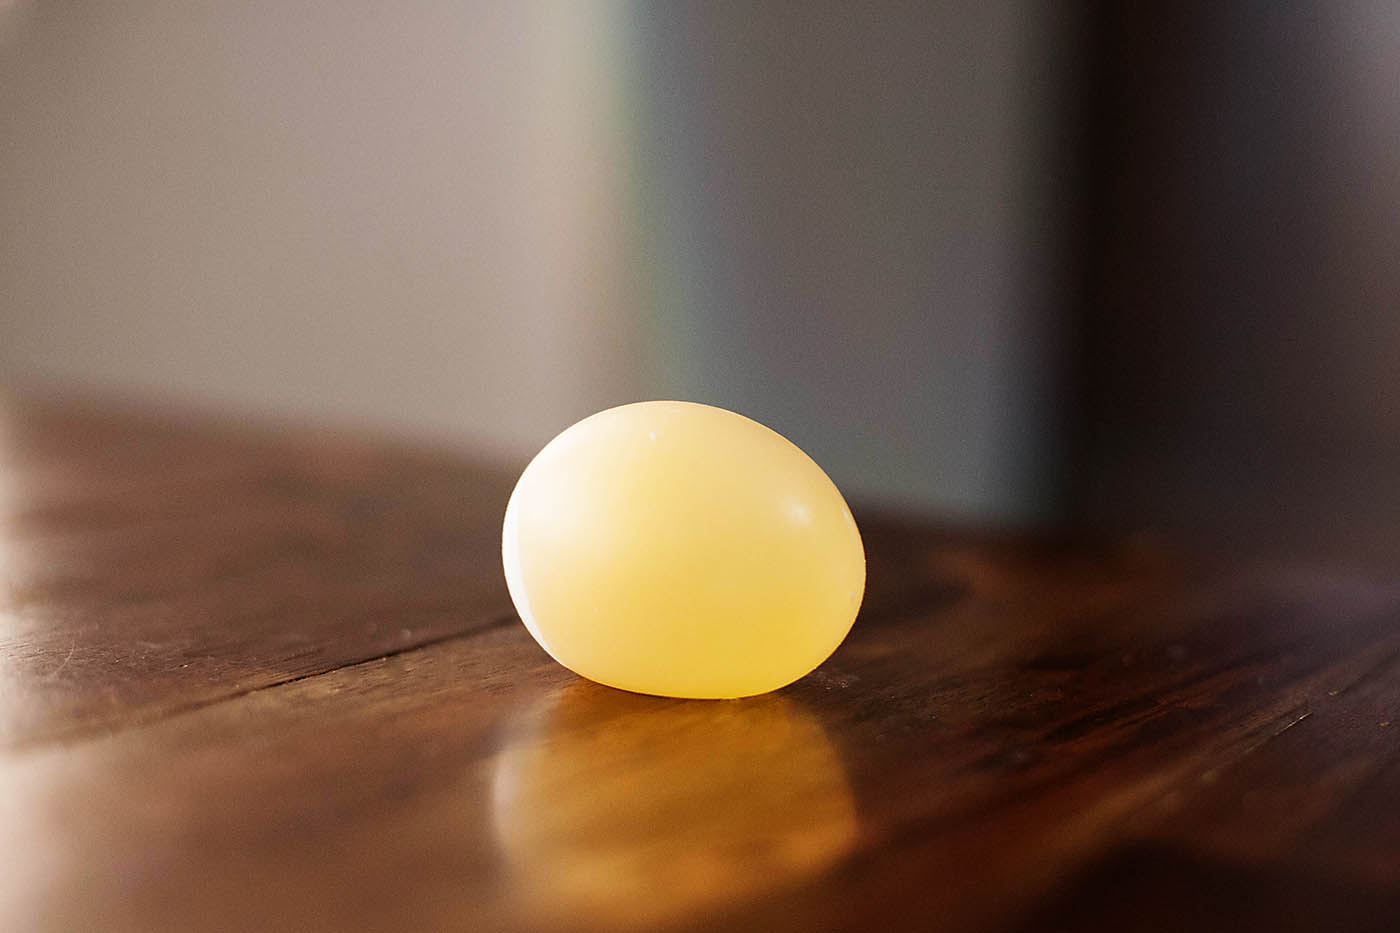 kix-science-naked-eggs-3w